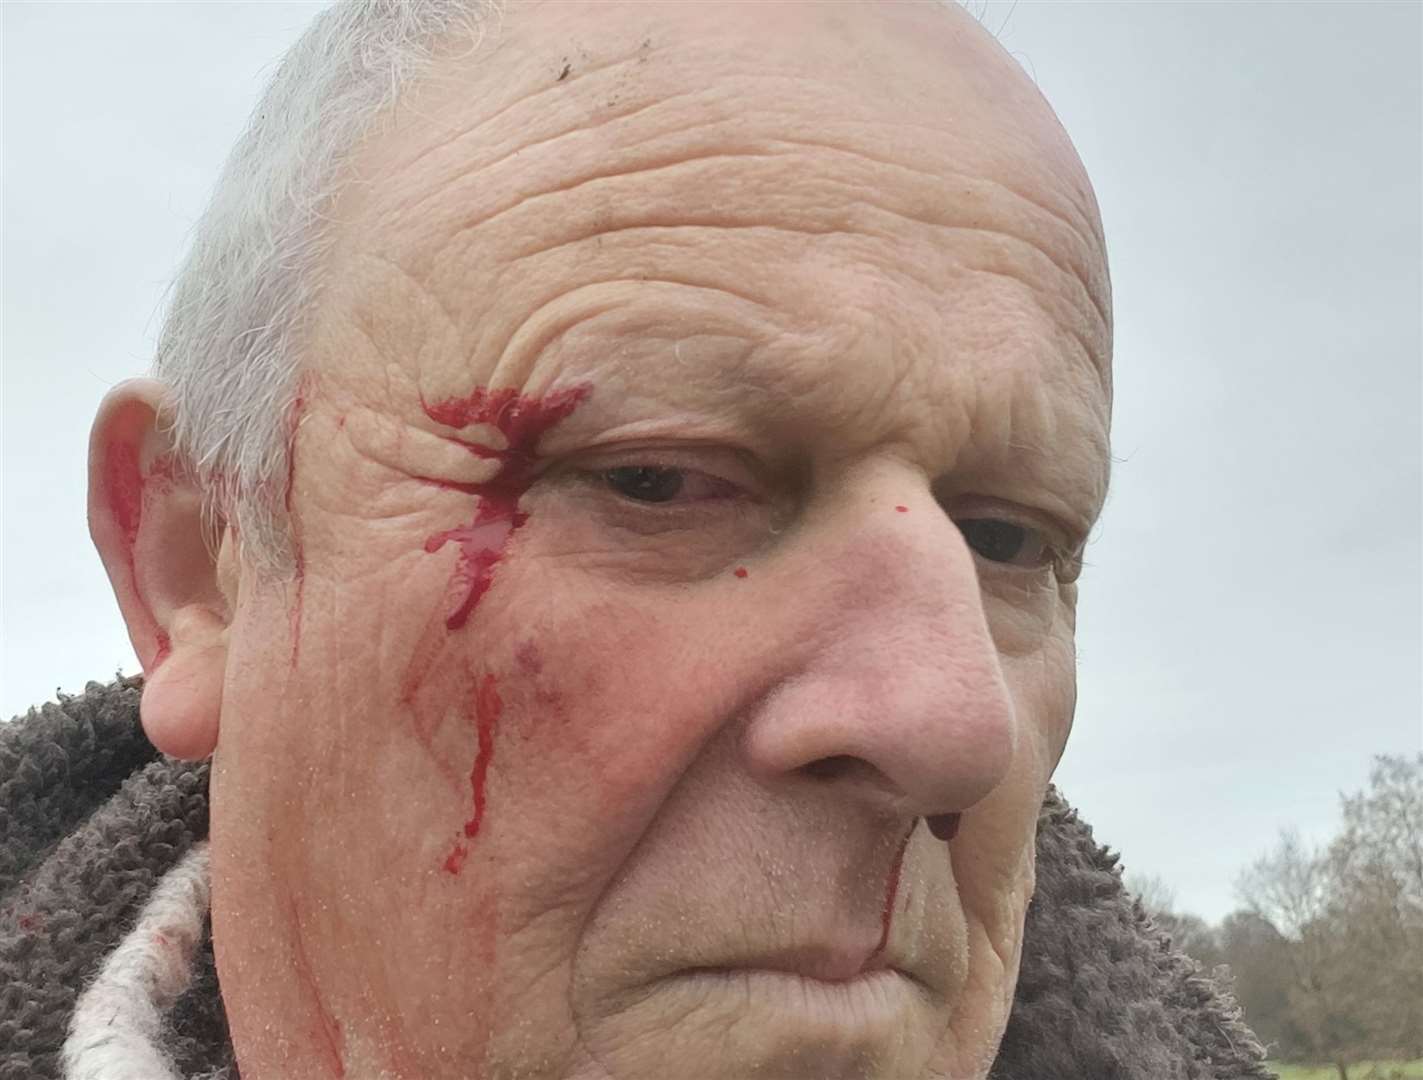 Nigel Blacklocks suffered cuts and bruising